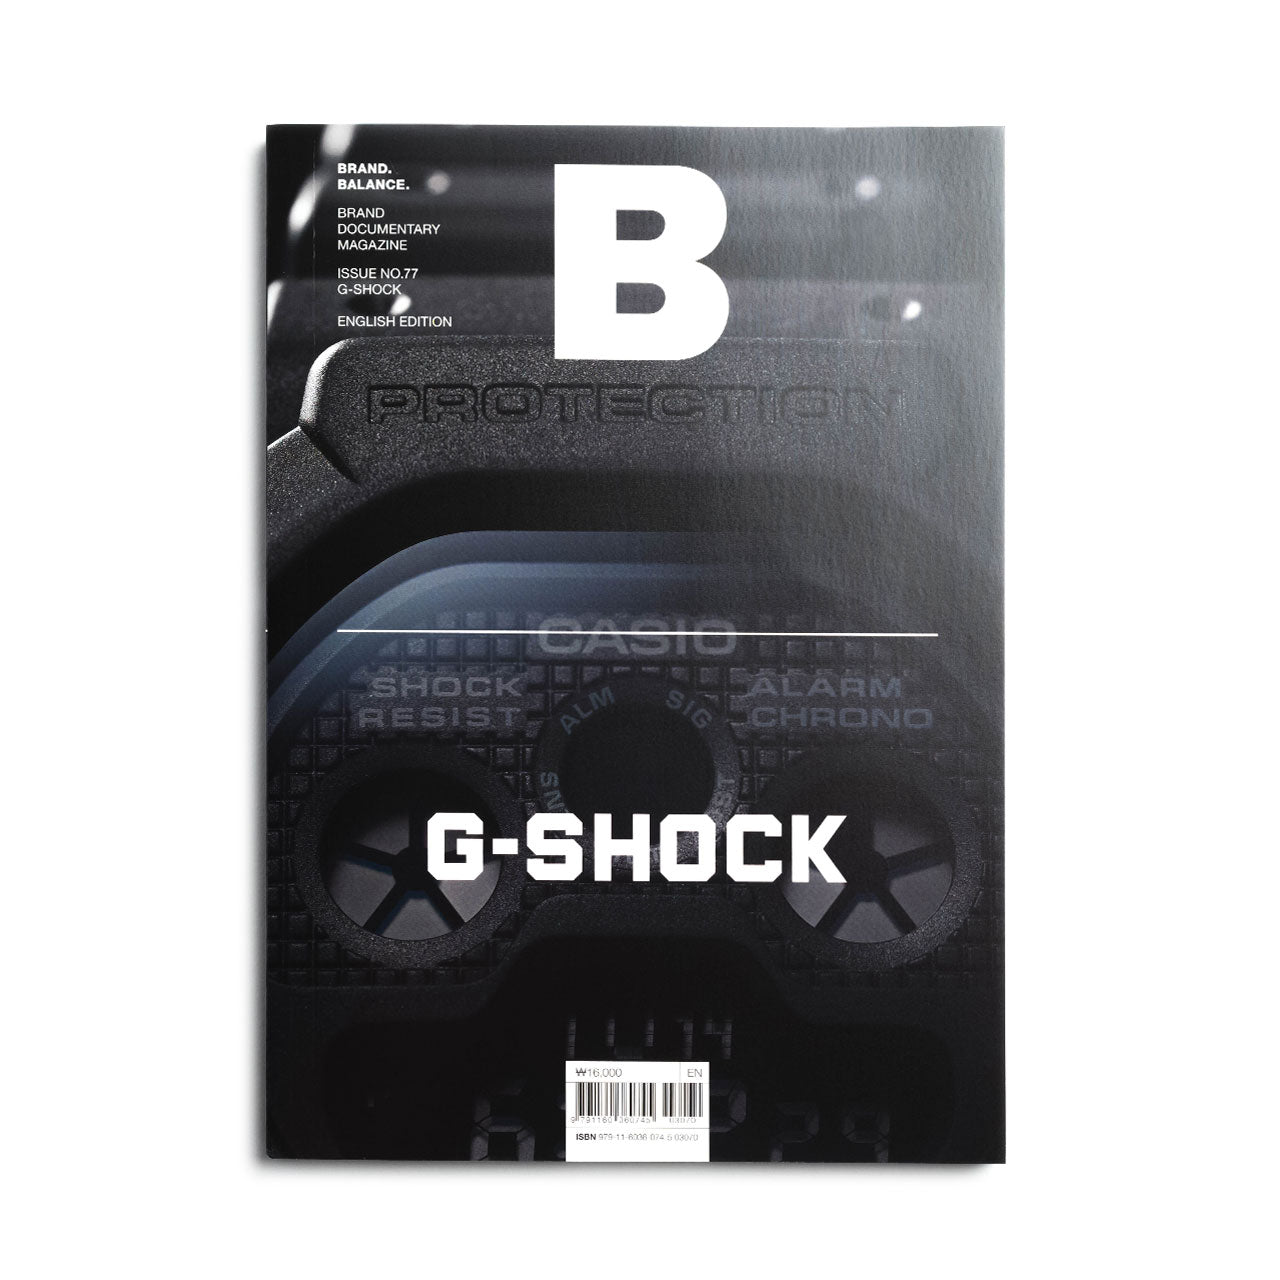 Magazine B: G-Shock